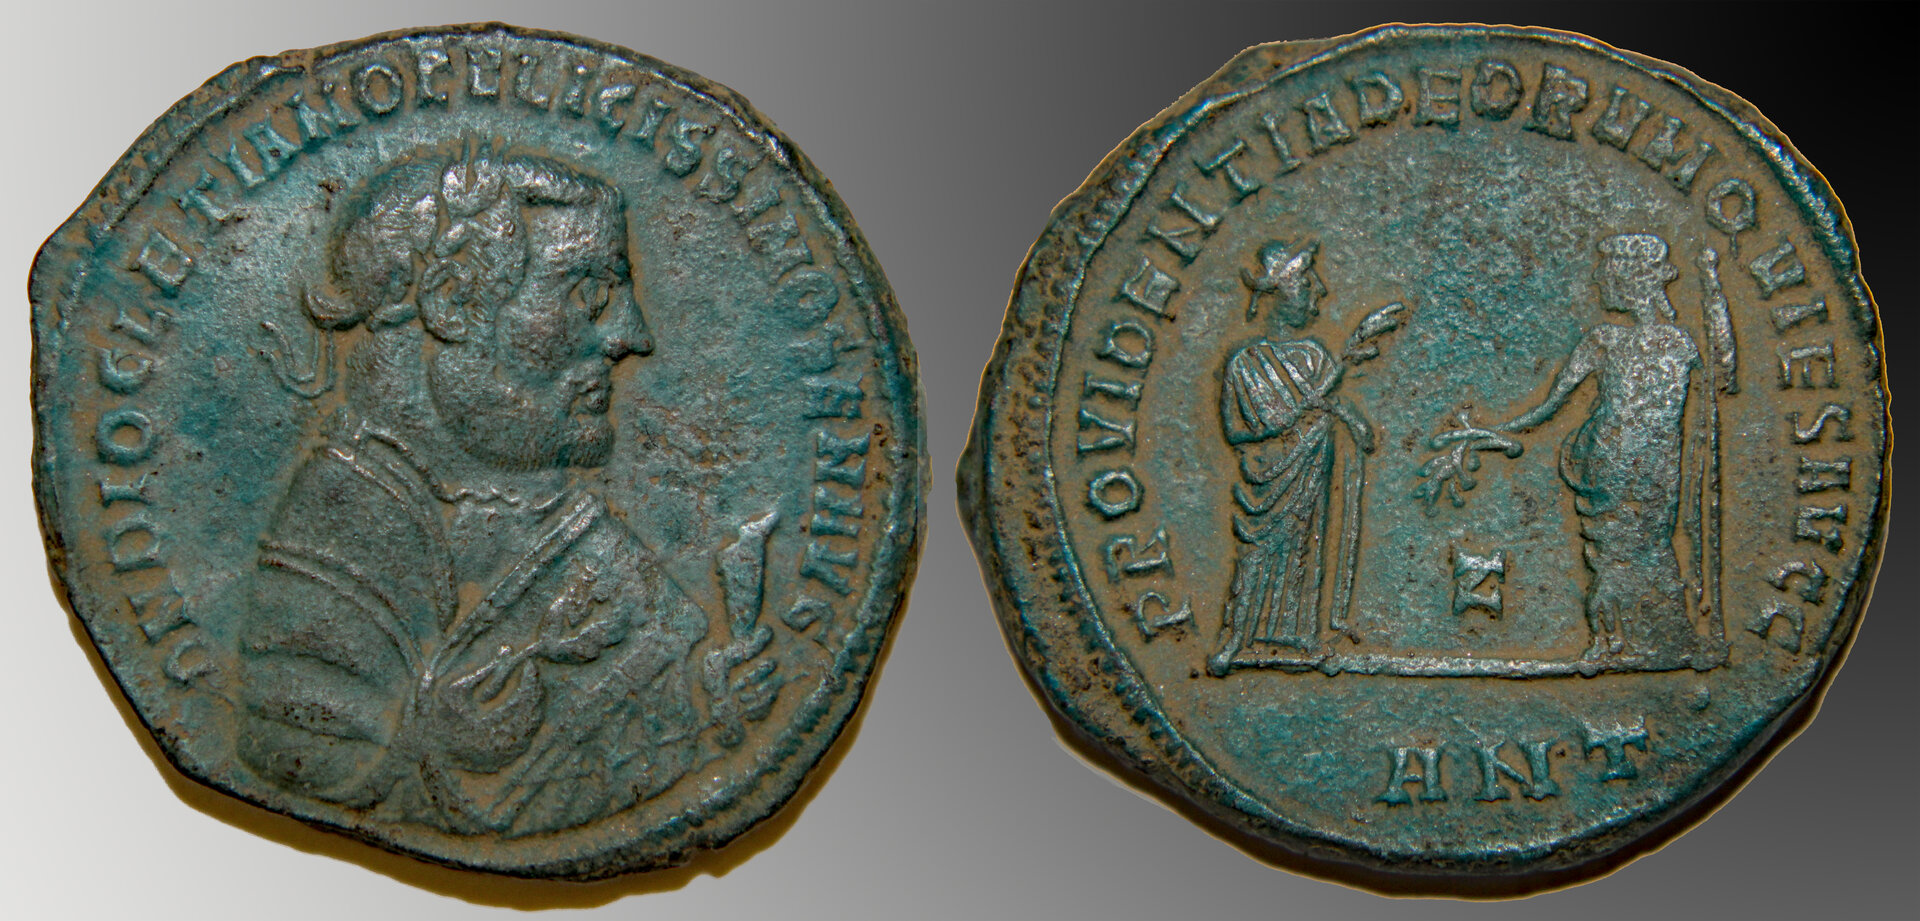 D-Camera Diocletian flash AE Abdication follis post refrom, 308 AD, Antioch  10.5 g  01-05-21.jpg